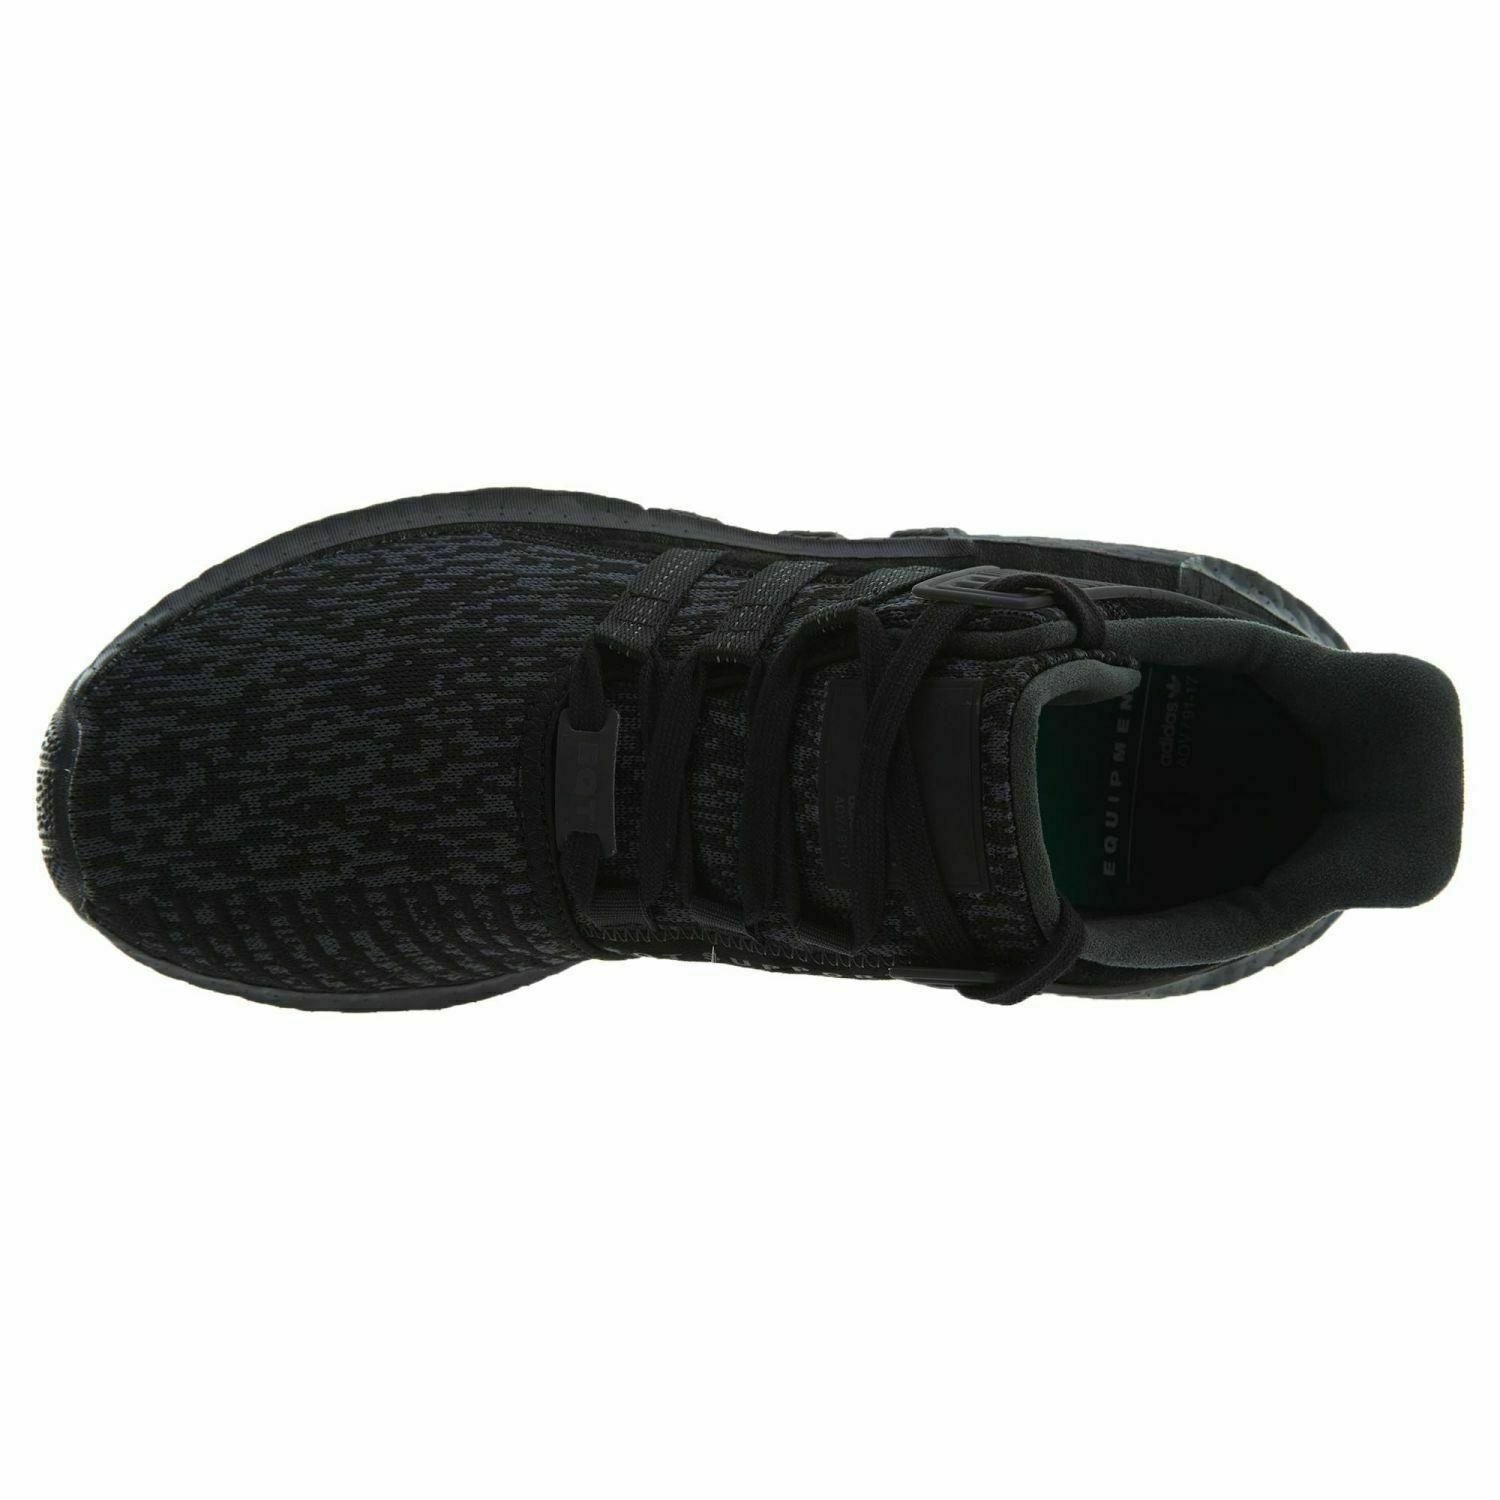 Adidas shoes EQT Support - Black/Black/White 4